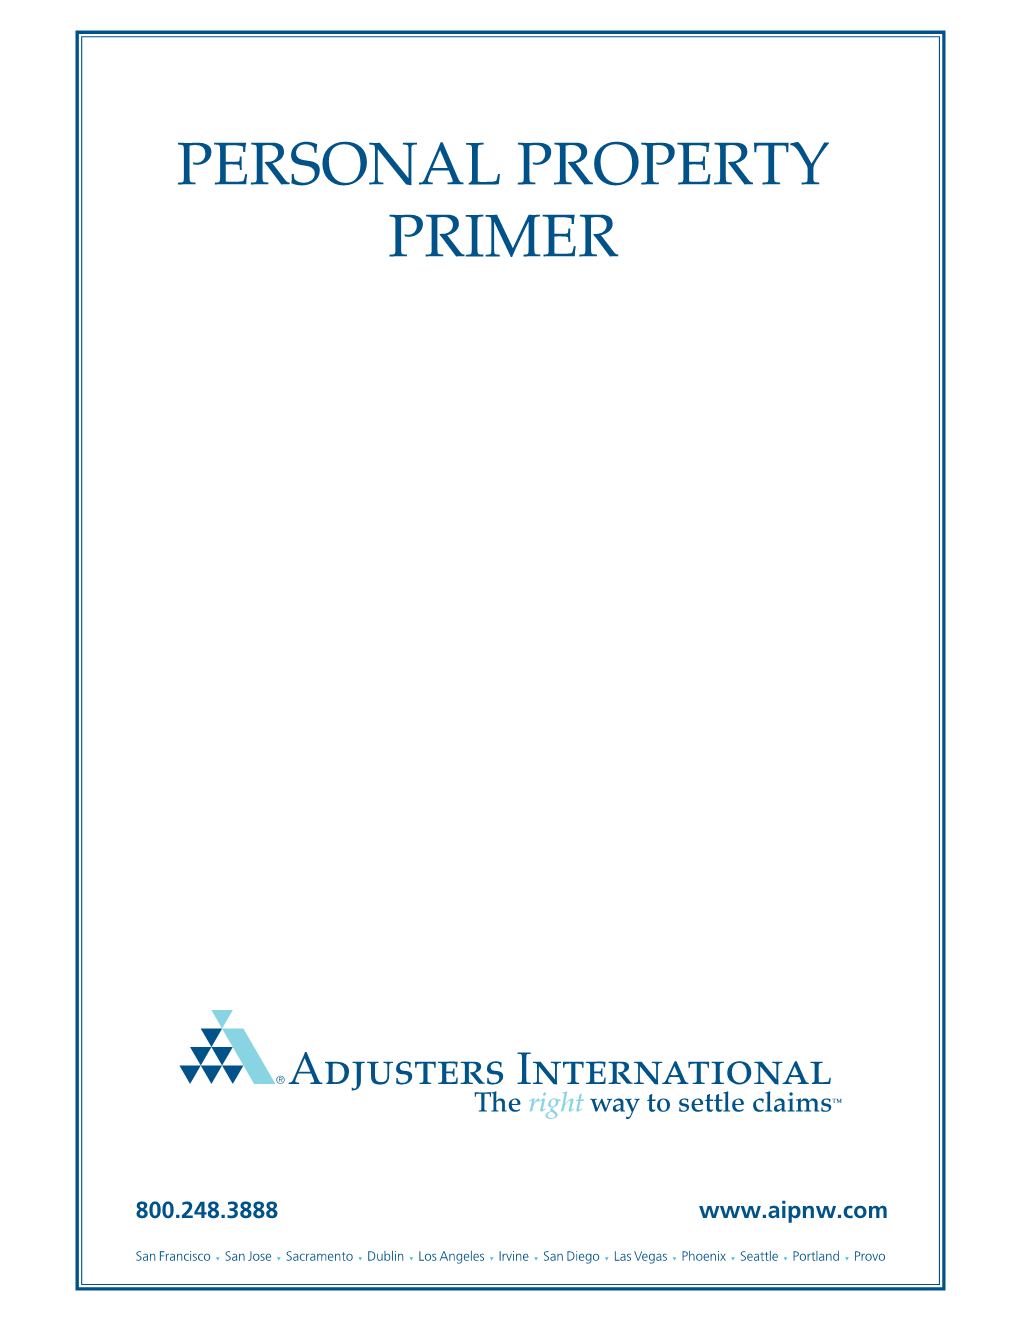 Adjusters International Firestorm Personal Property Primer